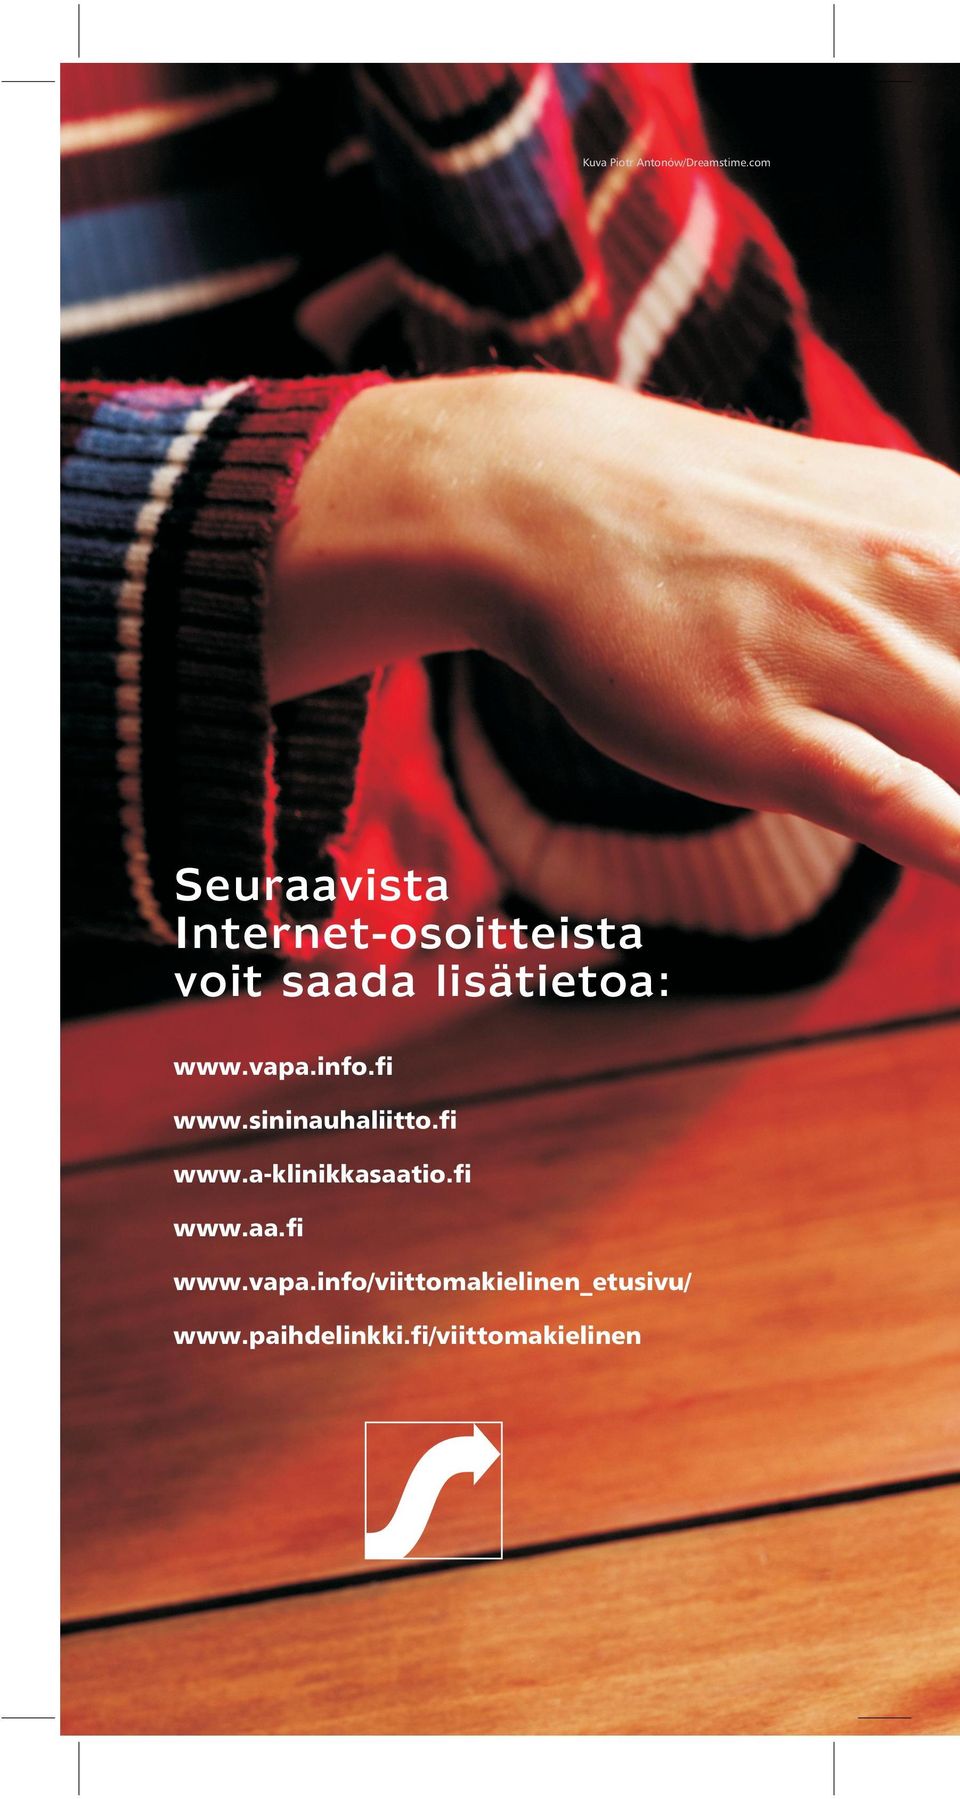 www.vapa.info.fi www.sininauhaliitto.fi www.a-klinikkasaatio.